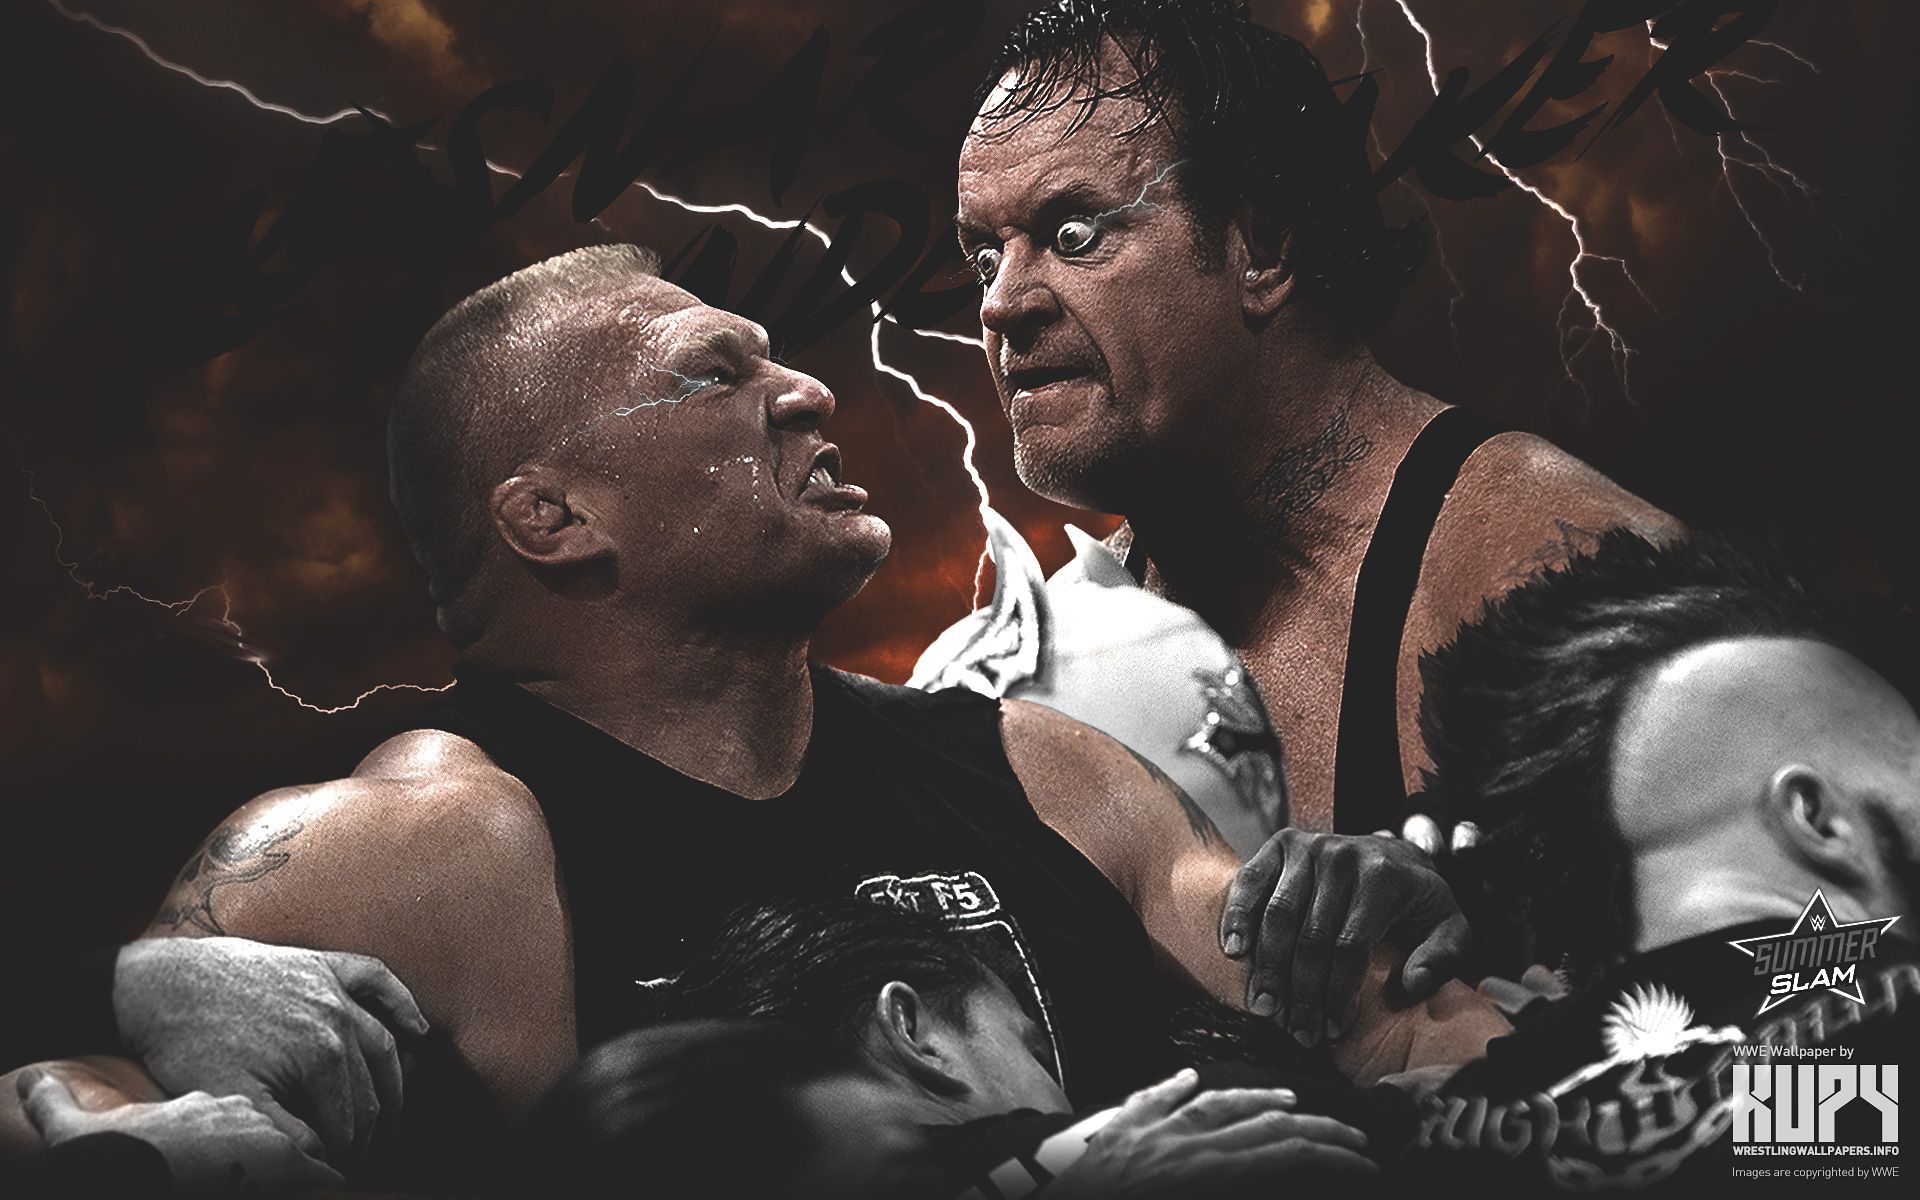 Free download NEW WWE Summerslam Brock Lesnar vs The Undertaker